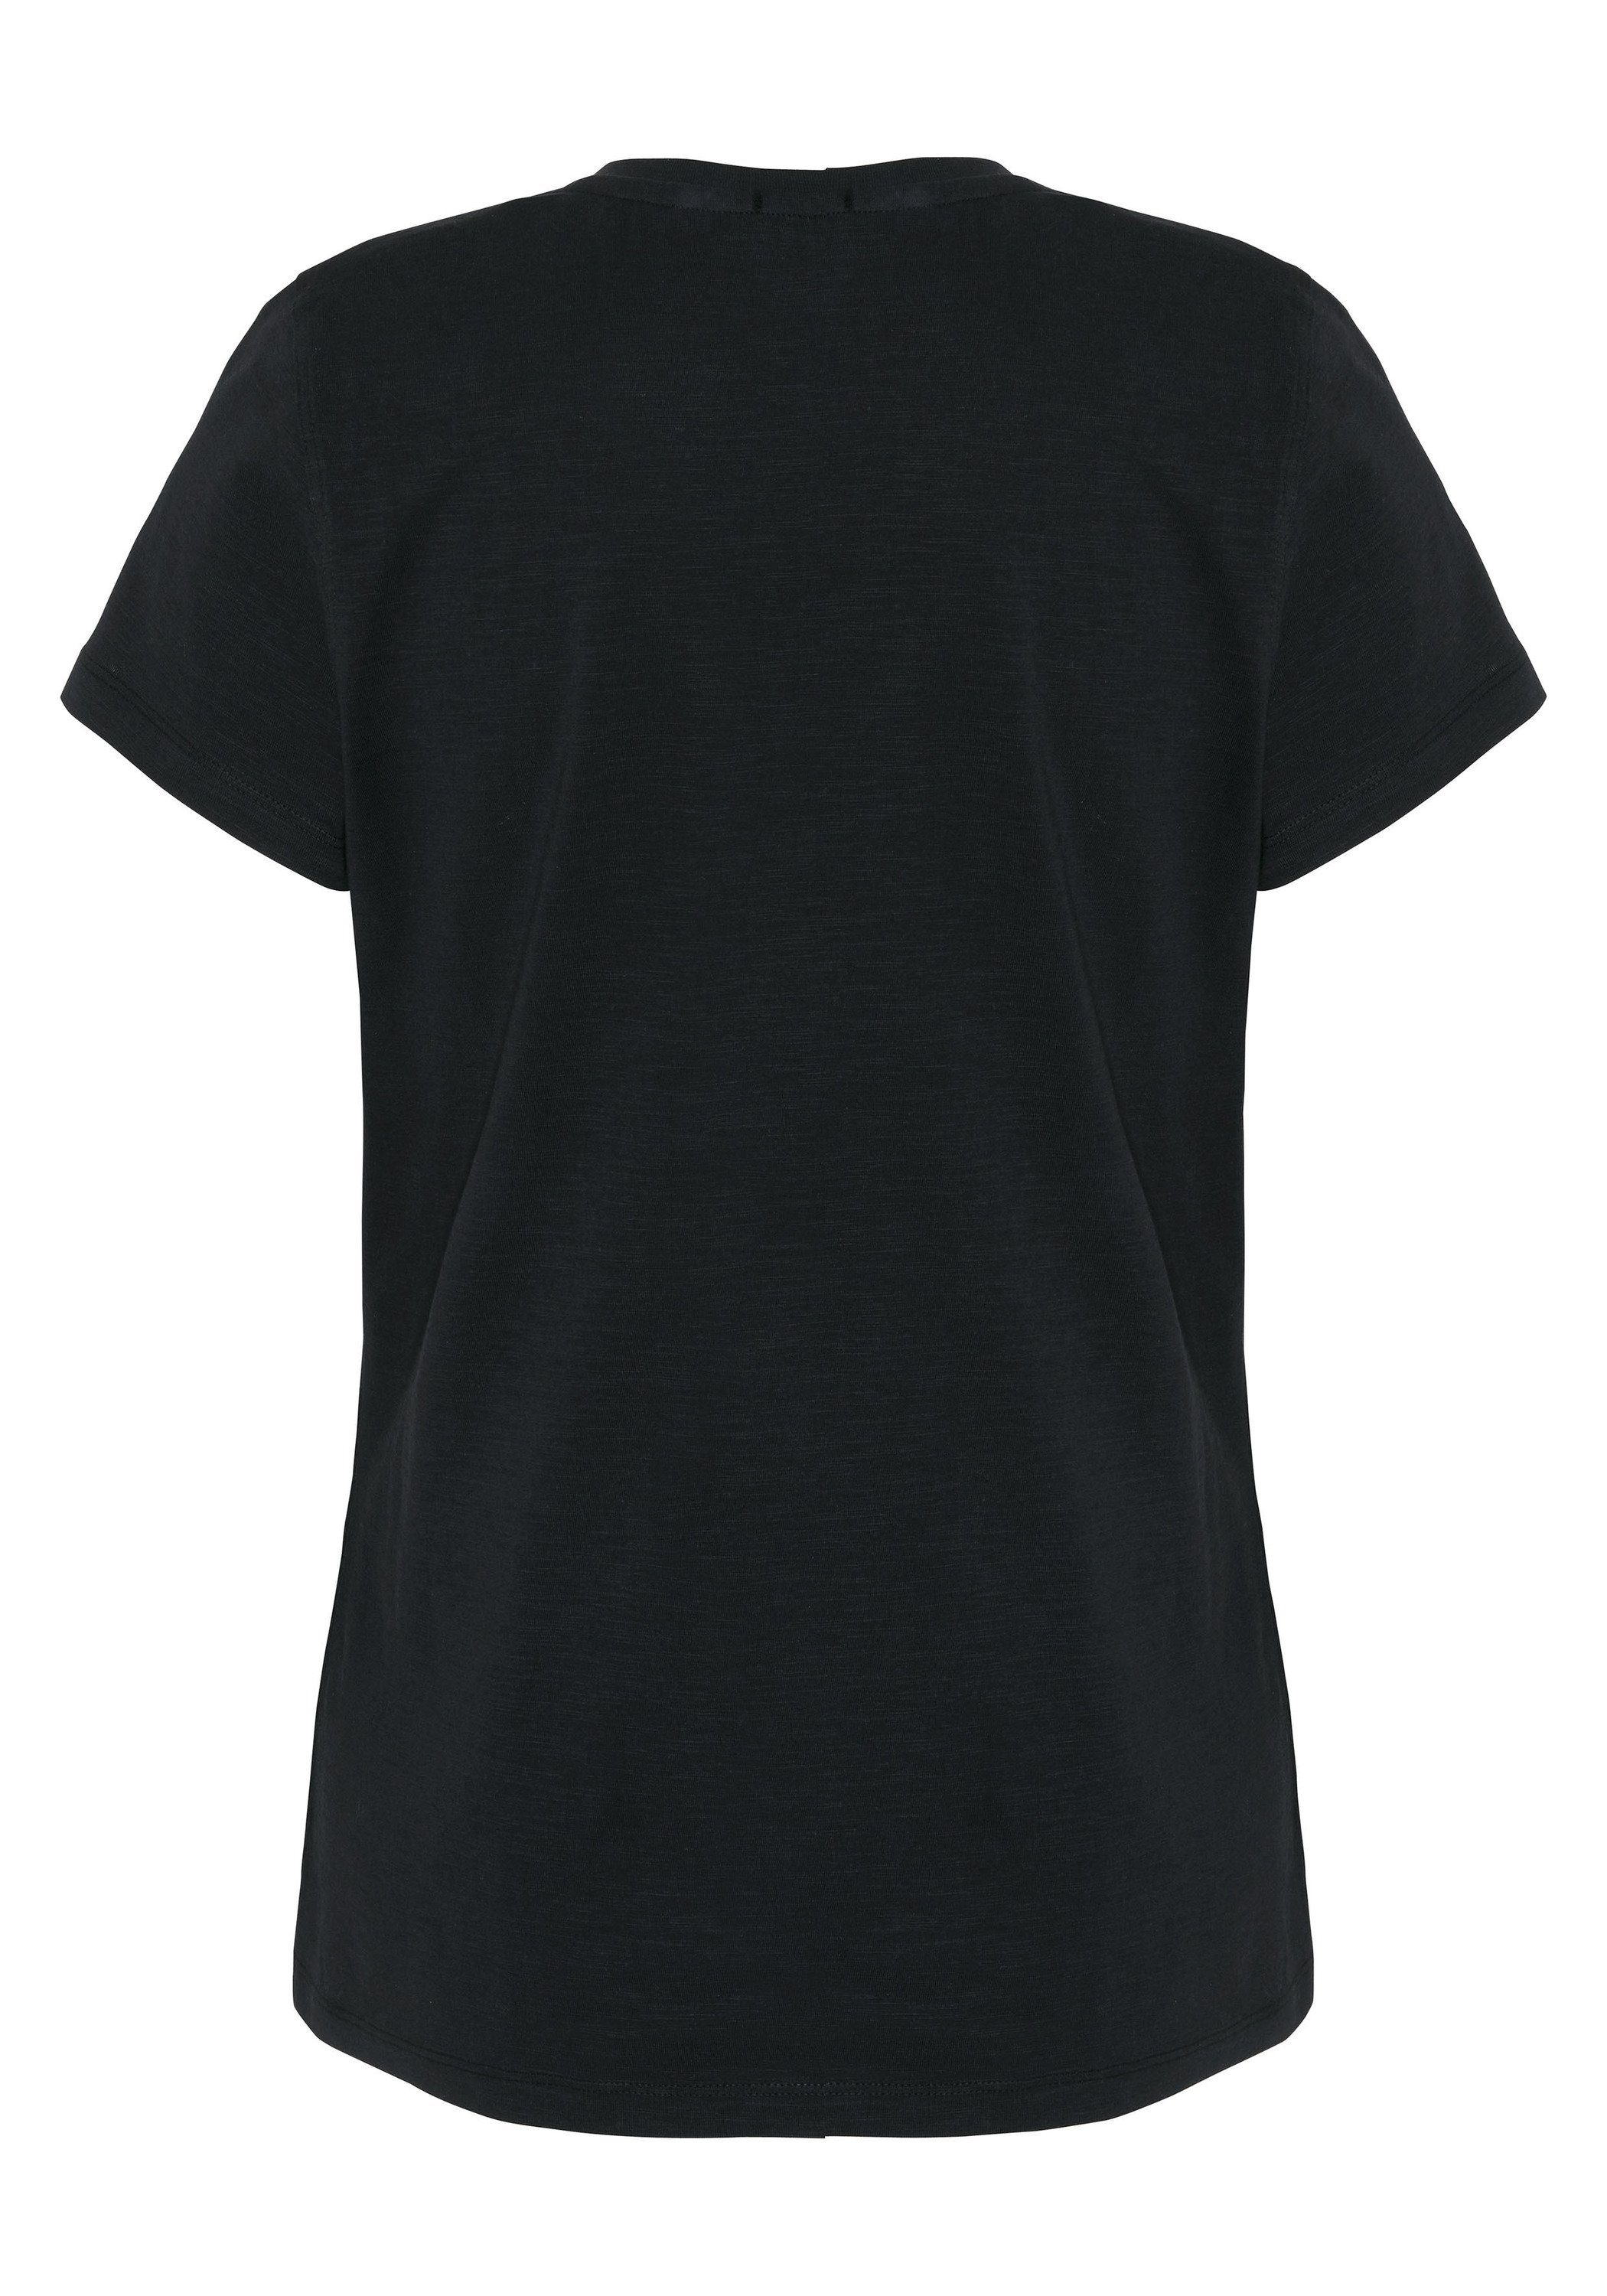 Chiemsee Print-Shirt T-Shirt mit Beauty Jumper-Frontprint 19-3911 1 Black